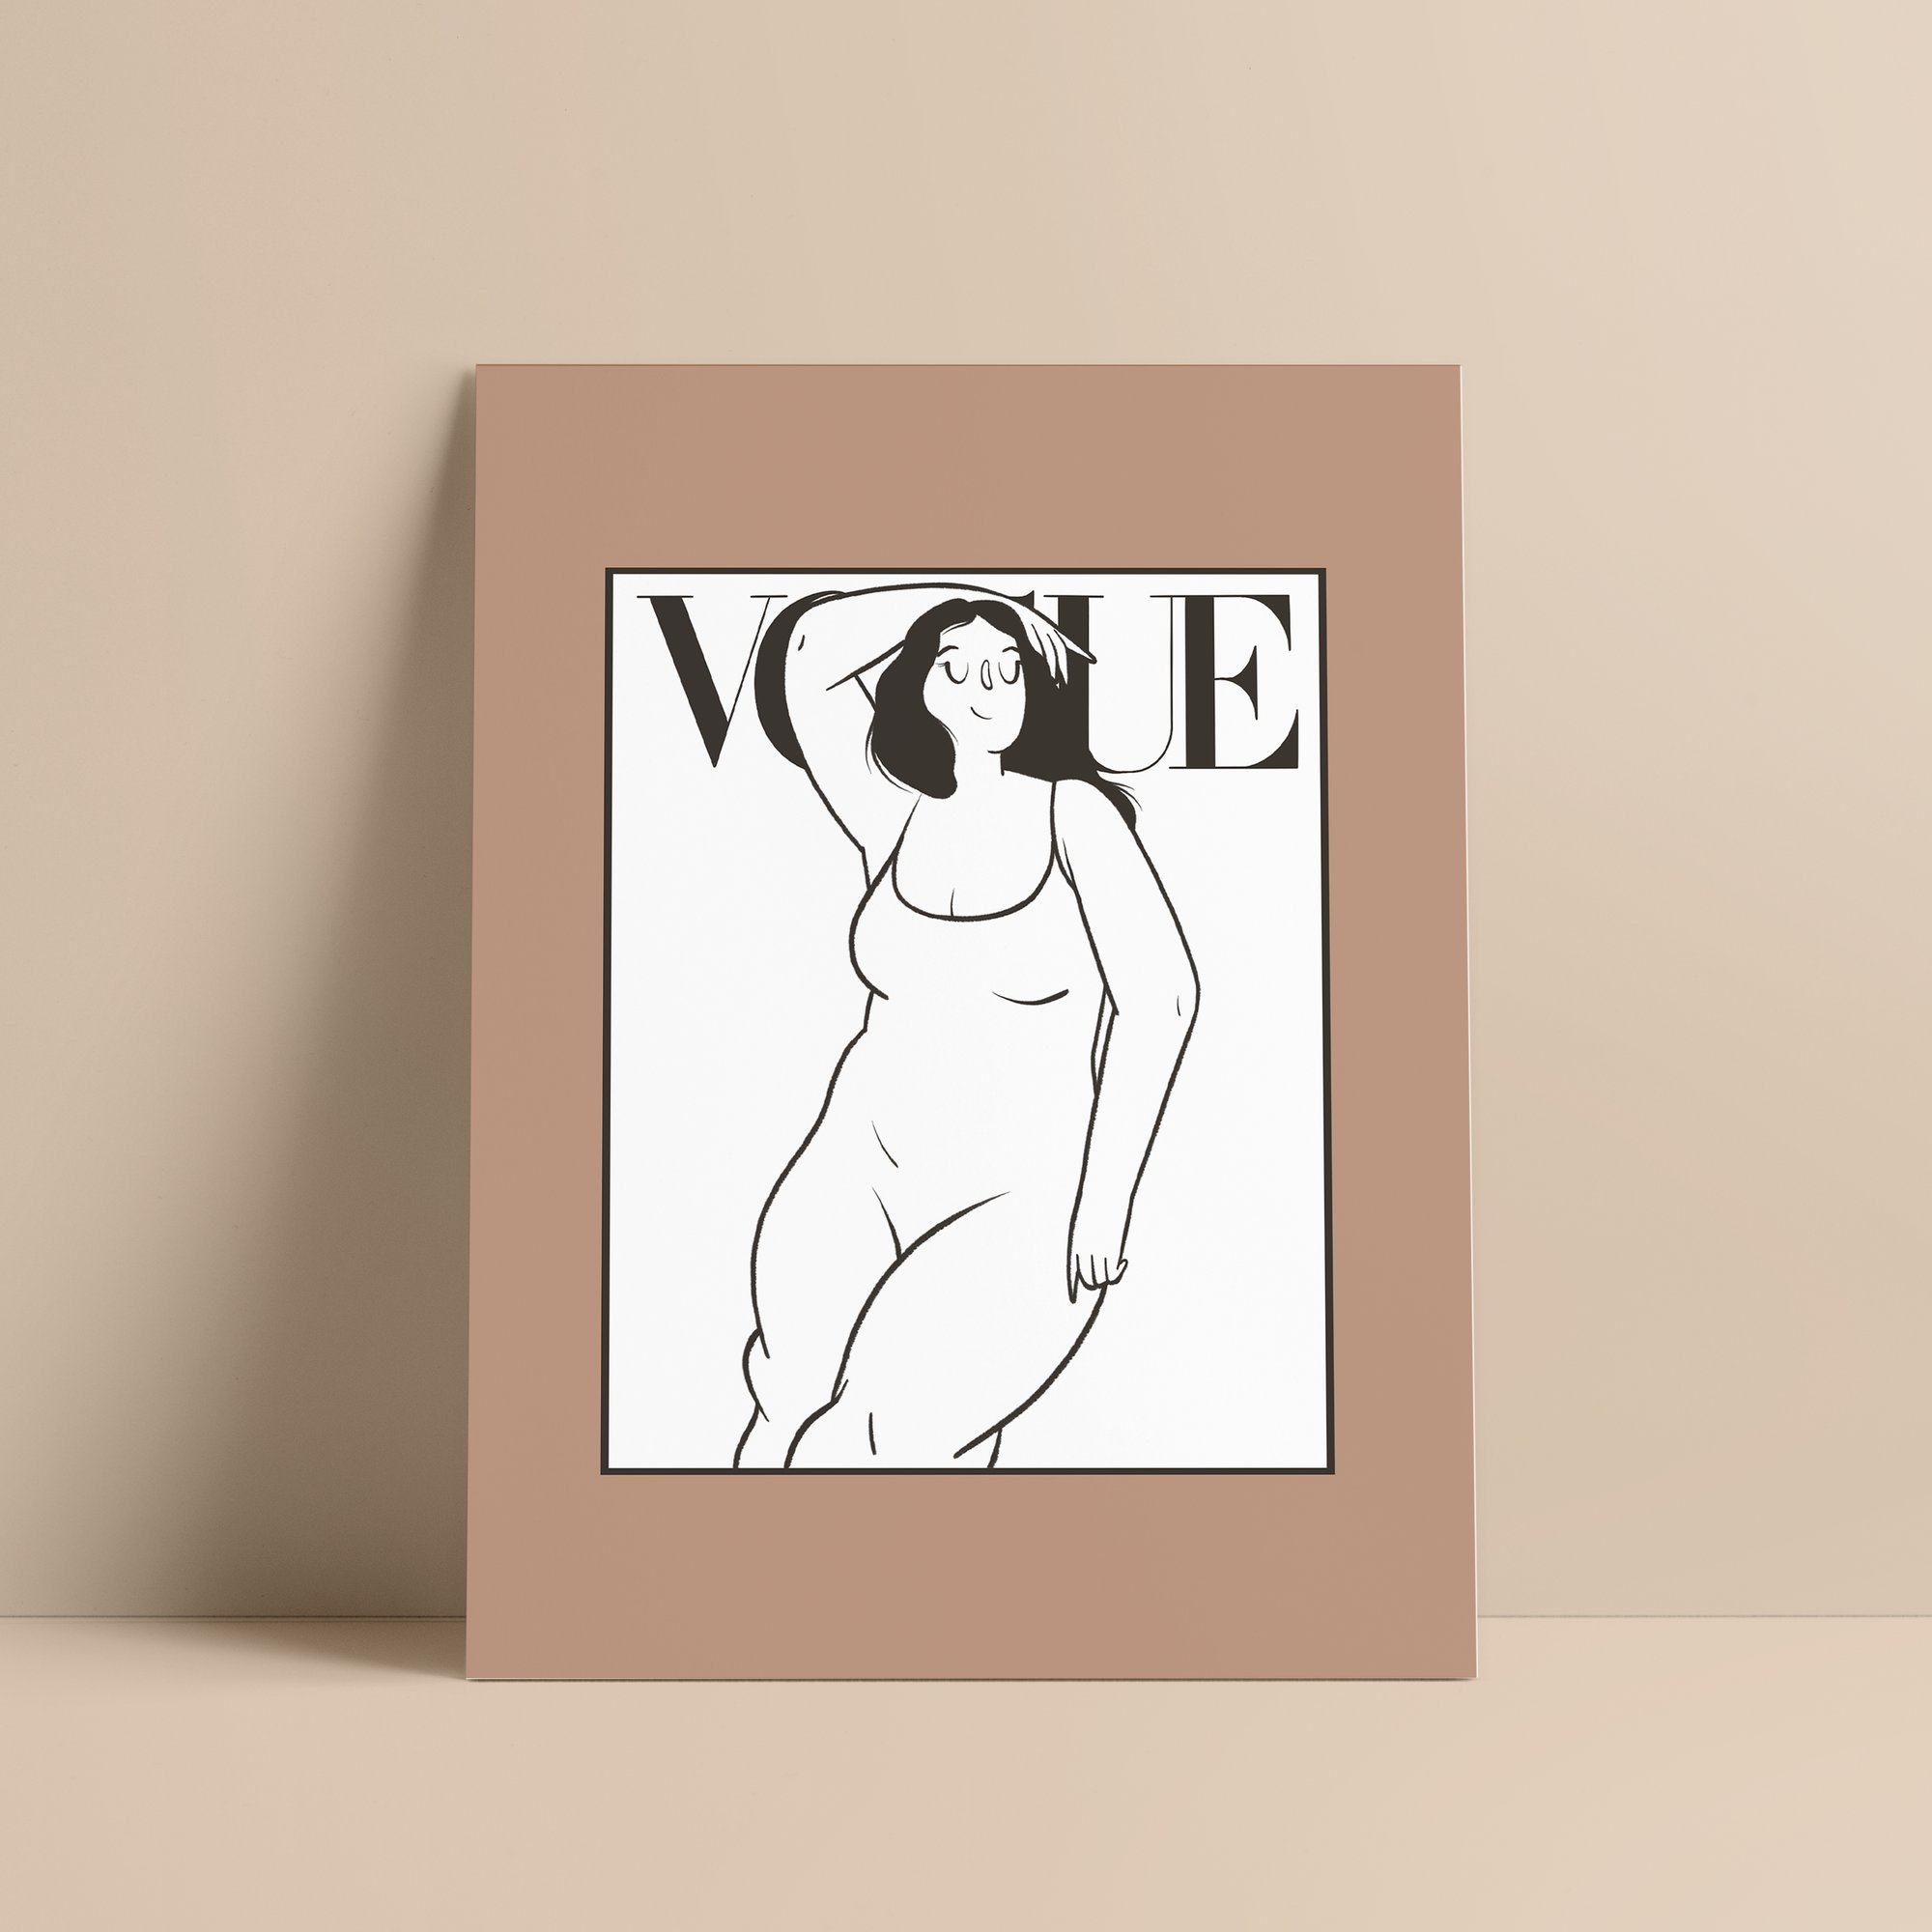 Image of VOGUE print